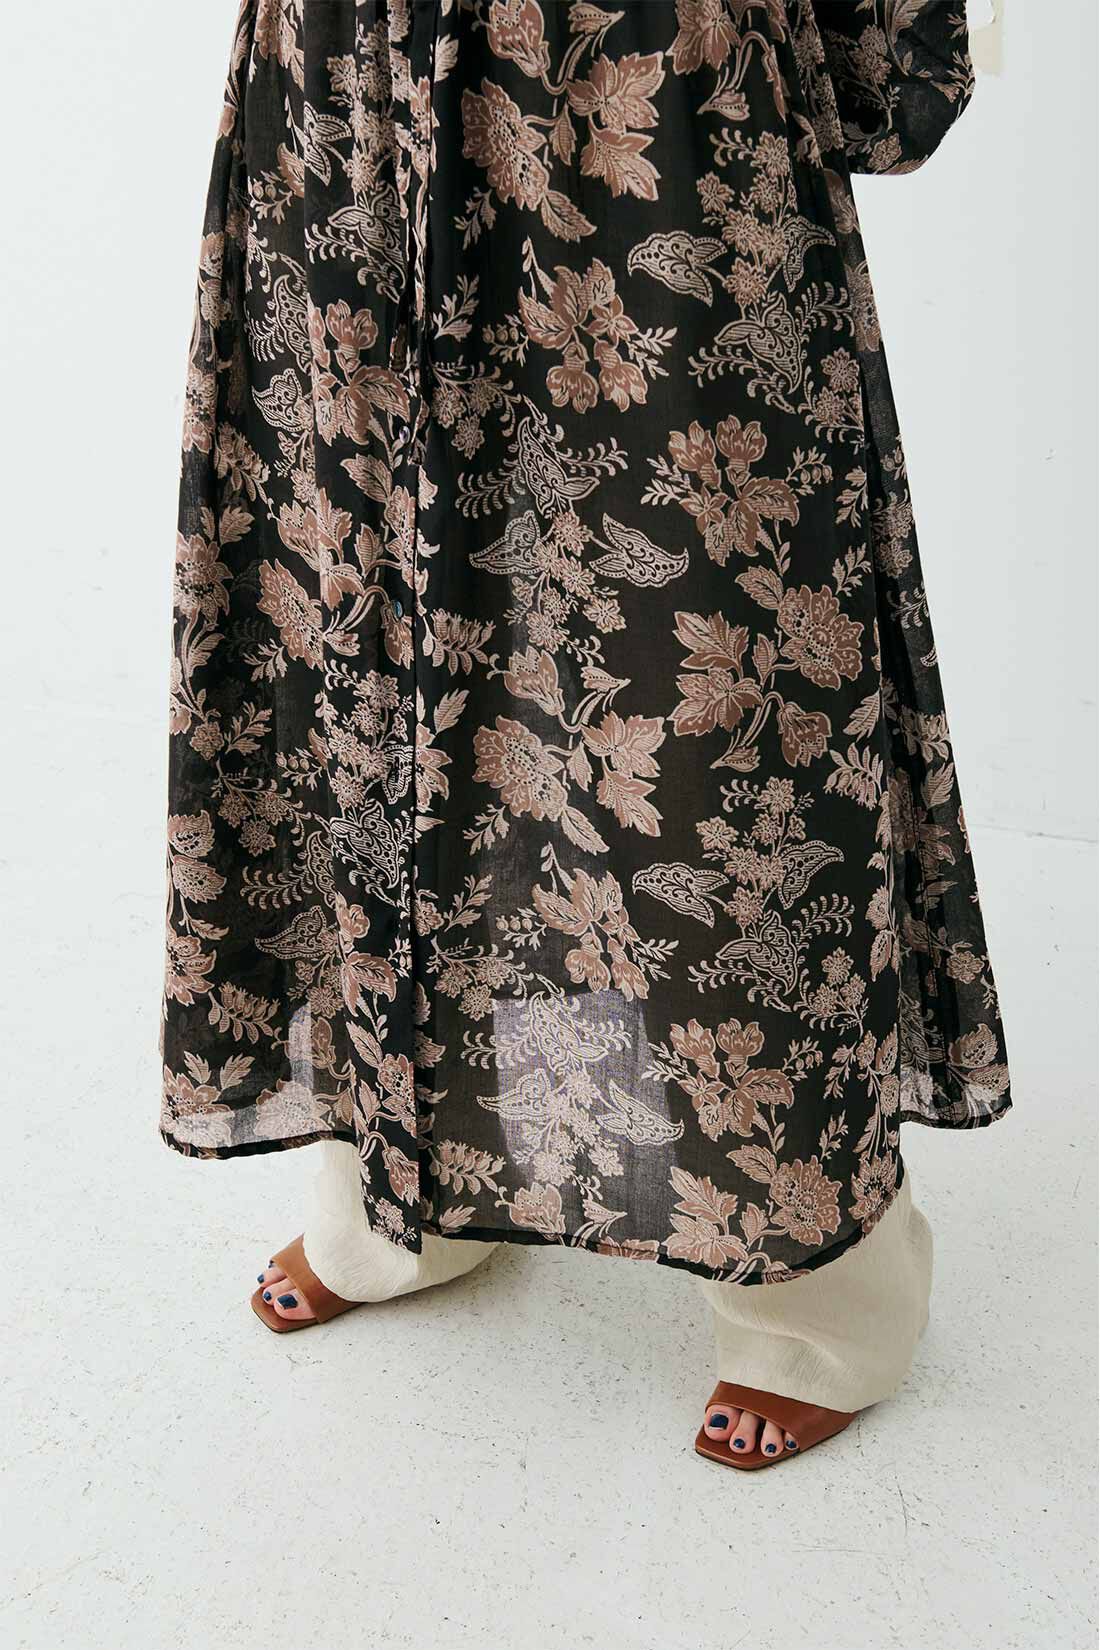 MEDE19F|MEDE19F　ヴィンテージパターンプリント 羽織りワンピース〈ブラック〉|ニュアンスのある女性らしい上品な透け感。